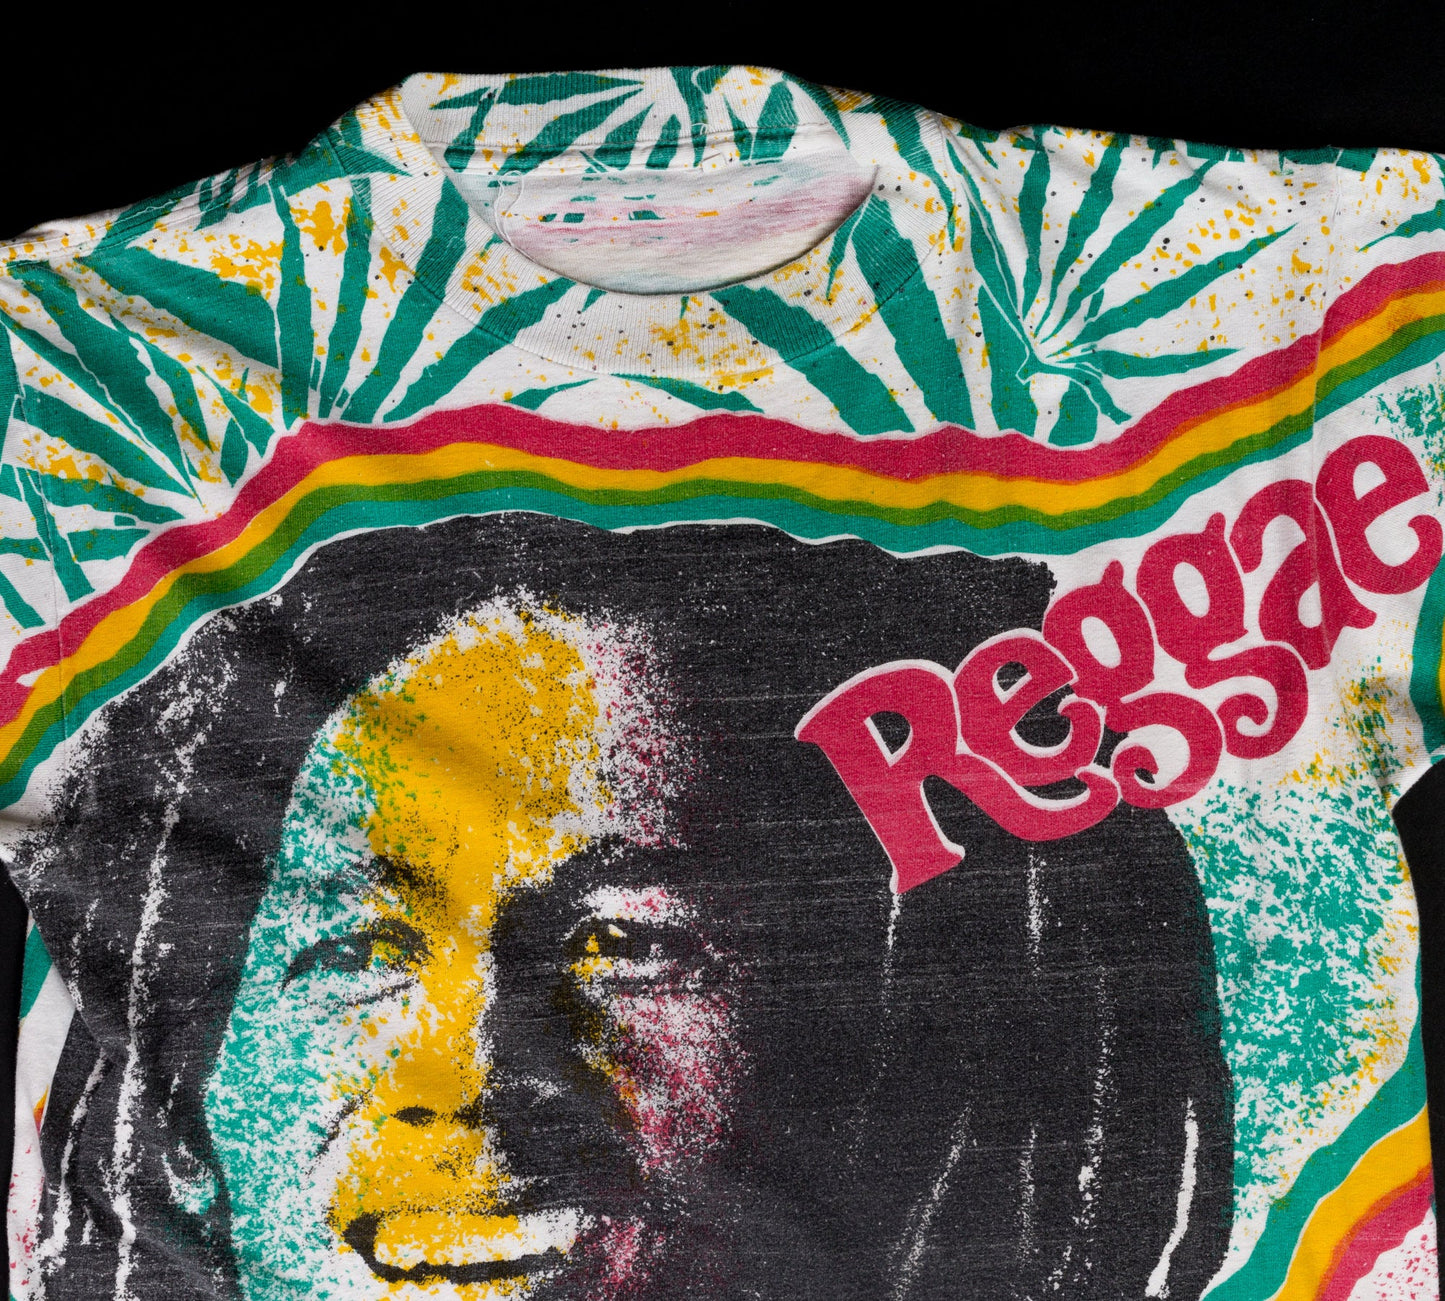 Vintage 90s Bob Marley T Shirt - Medium 